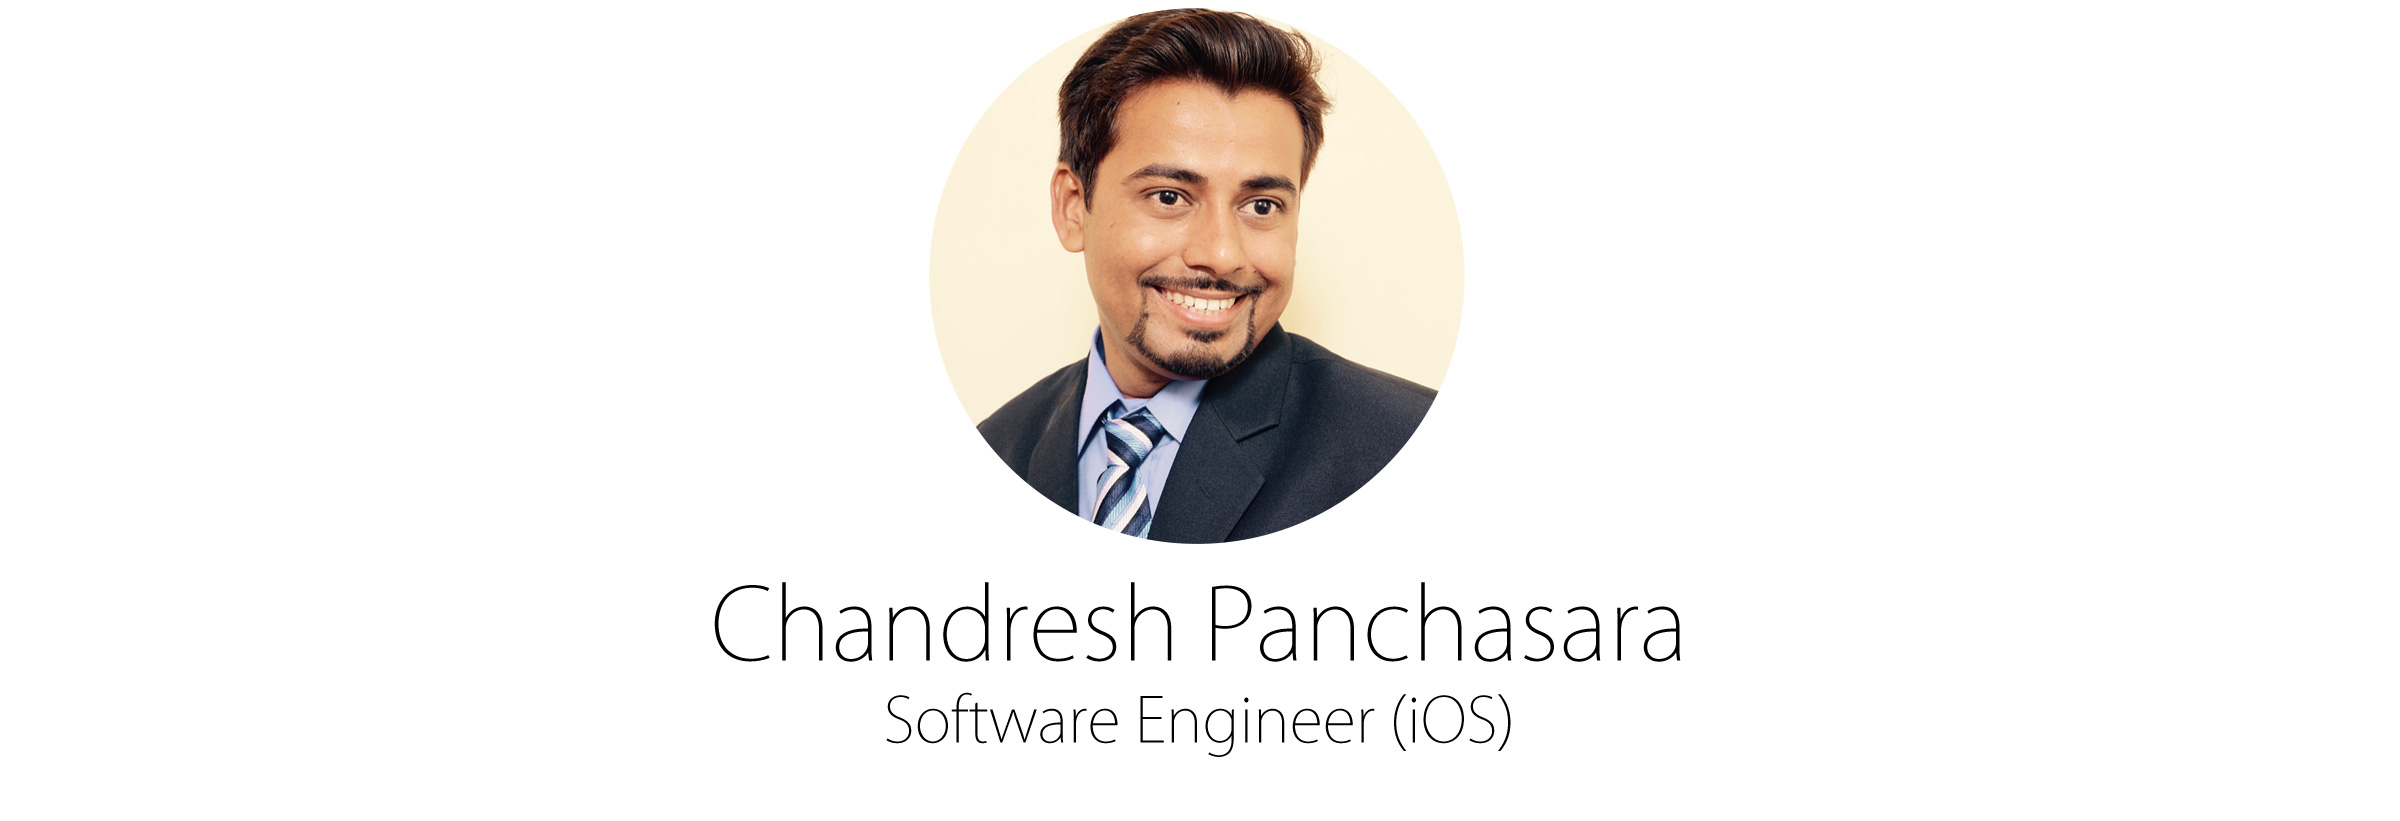 Panchasara Technologies | Chandresh Panchasara | Software Engineer iOS | The Complete iOS App Developer | Software Company in Junagadh | Software Companies in Junagadh - About Me